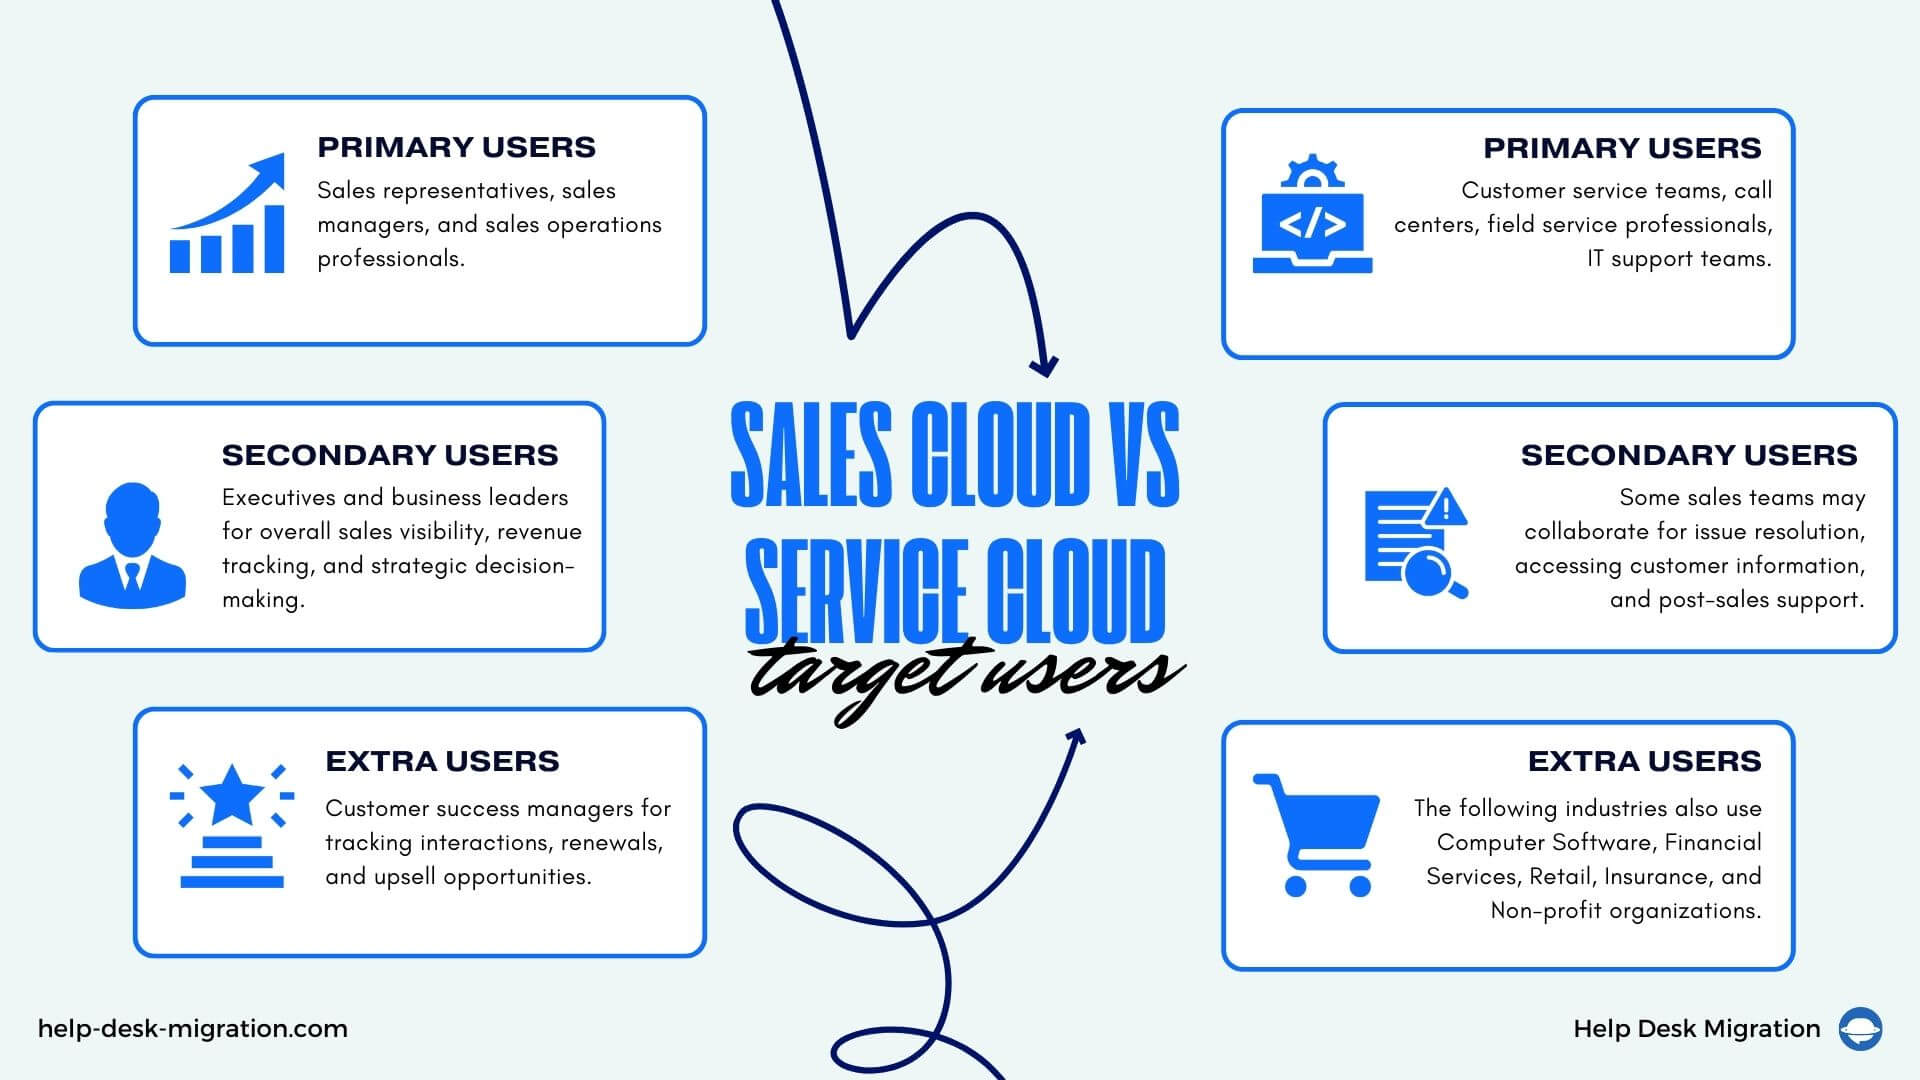 Target Users of Sales Cloud vs Service Cloud | Help Desk Migration Blog